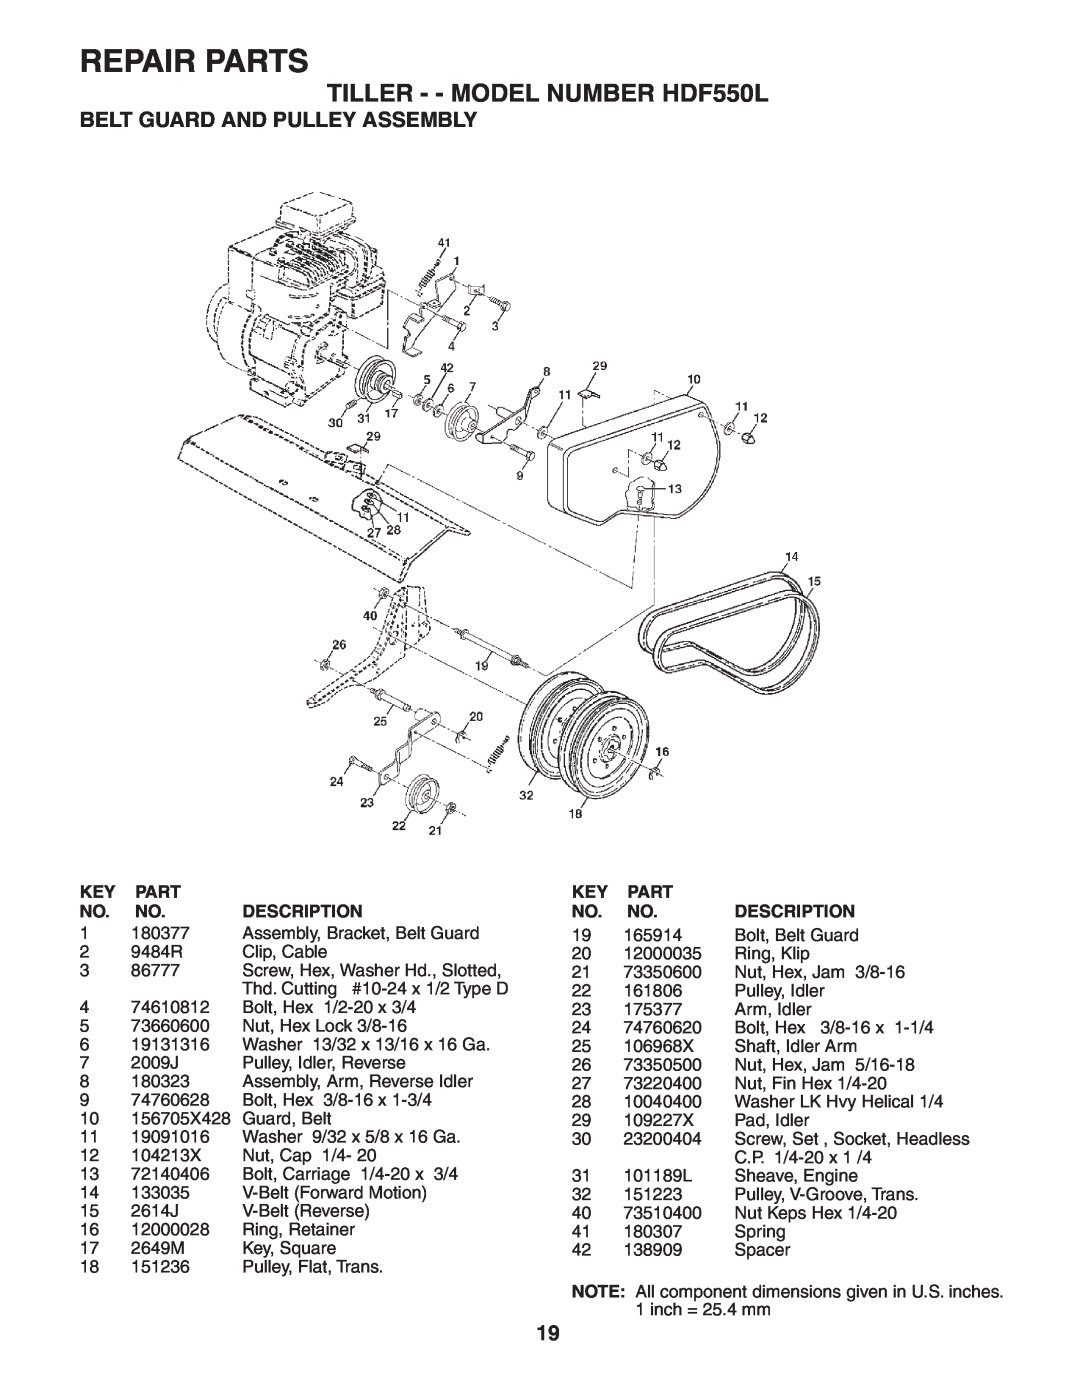 Poulan owner manual Belt Guard And Pulley Assembly, Repair Parts, TILLER - - MODEL NUMBER HDF550L, Description 